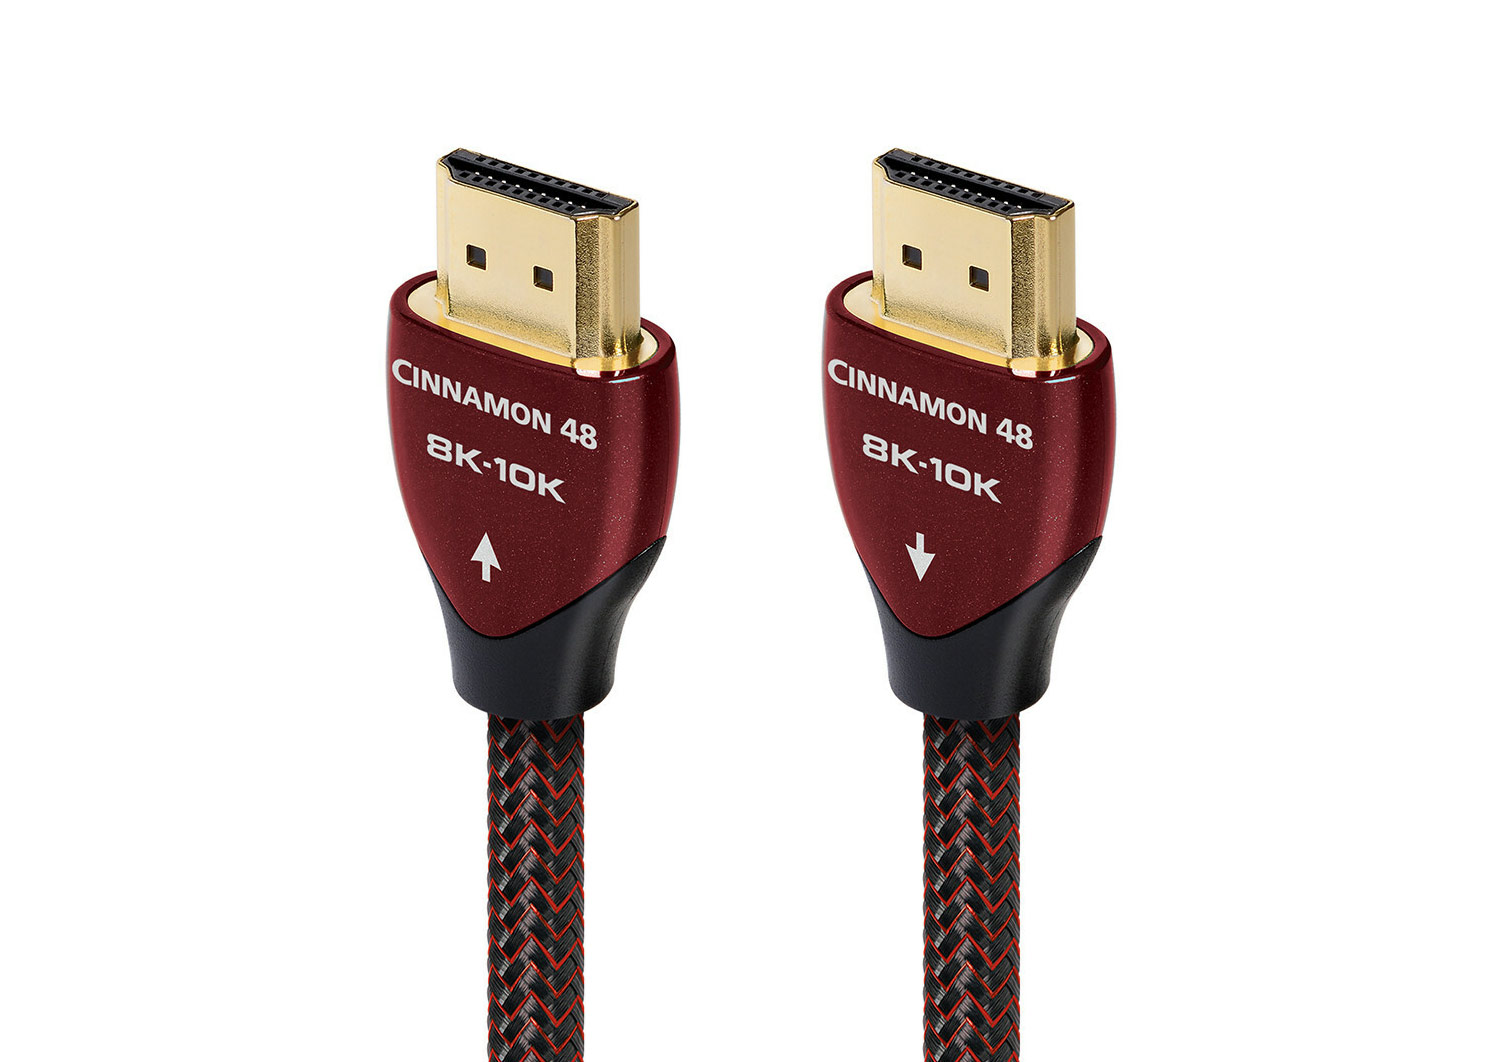 HDMI-Cinnamon 48 Version 2.1 (1.0M)